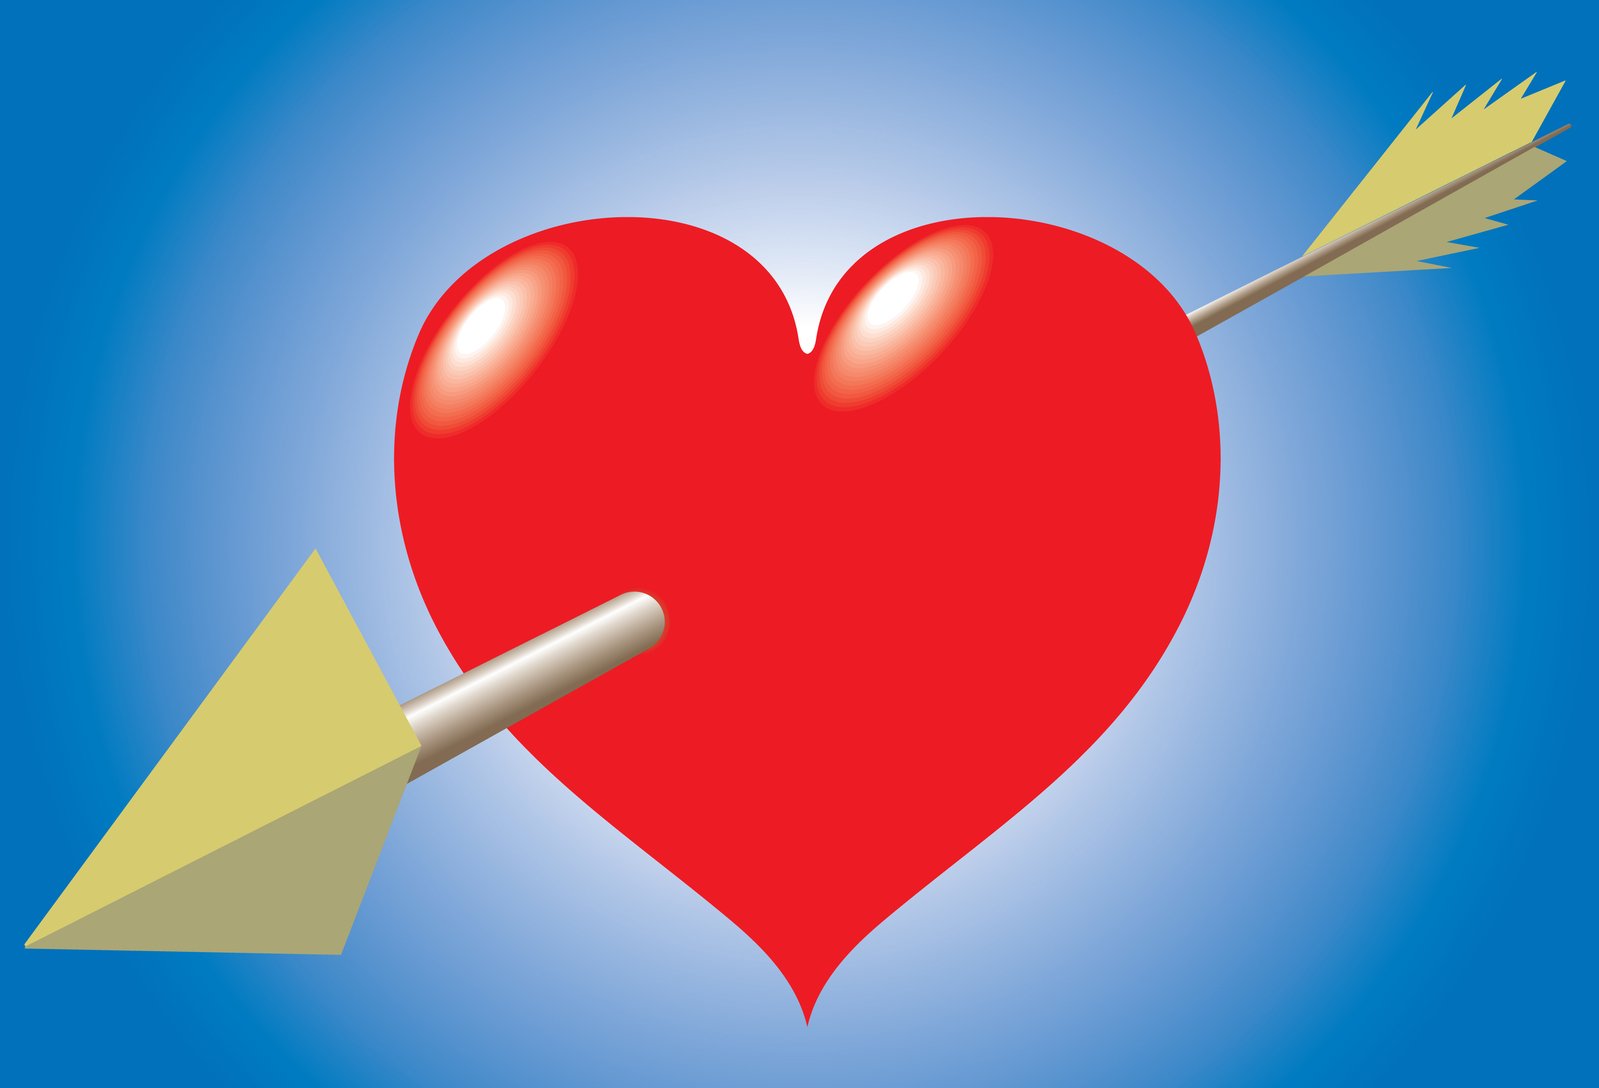 a heart pierced with a arrow, on a blue background